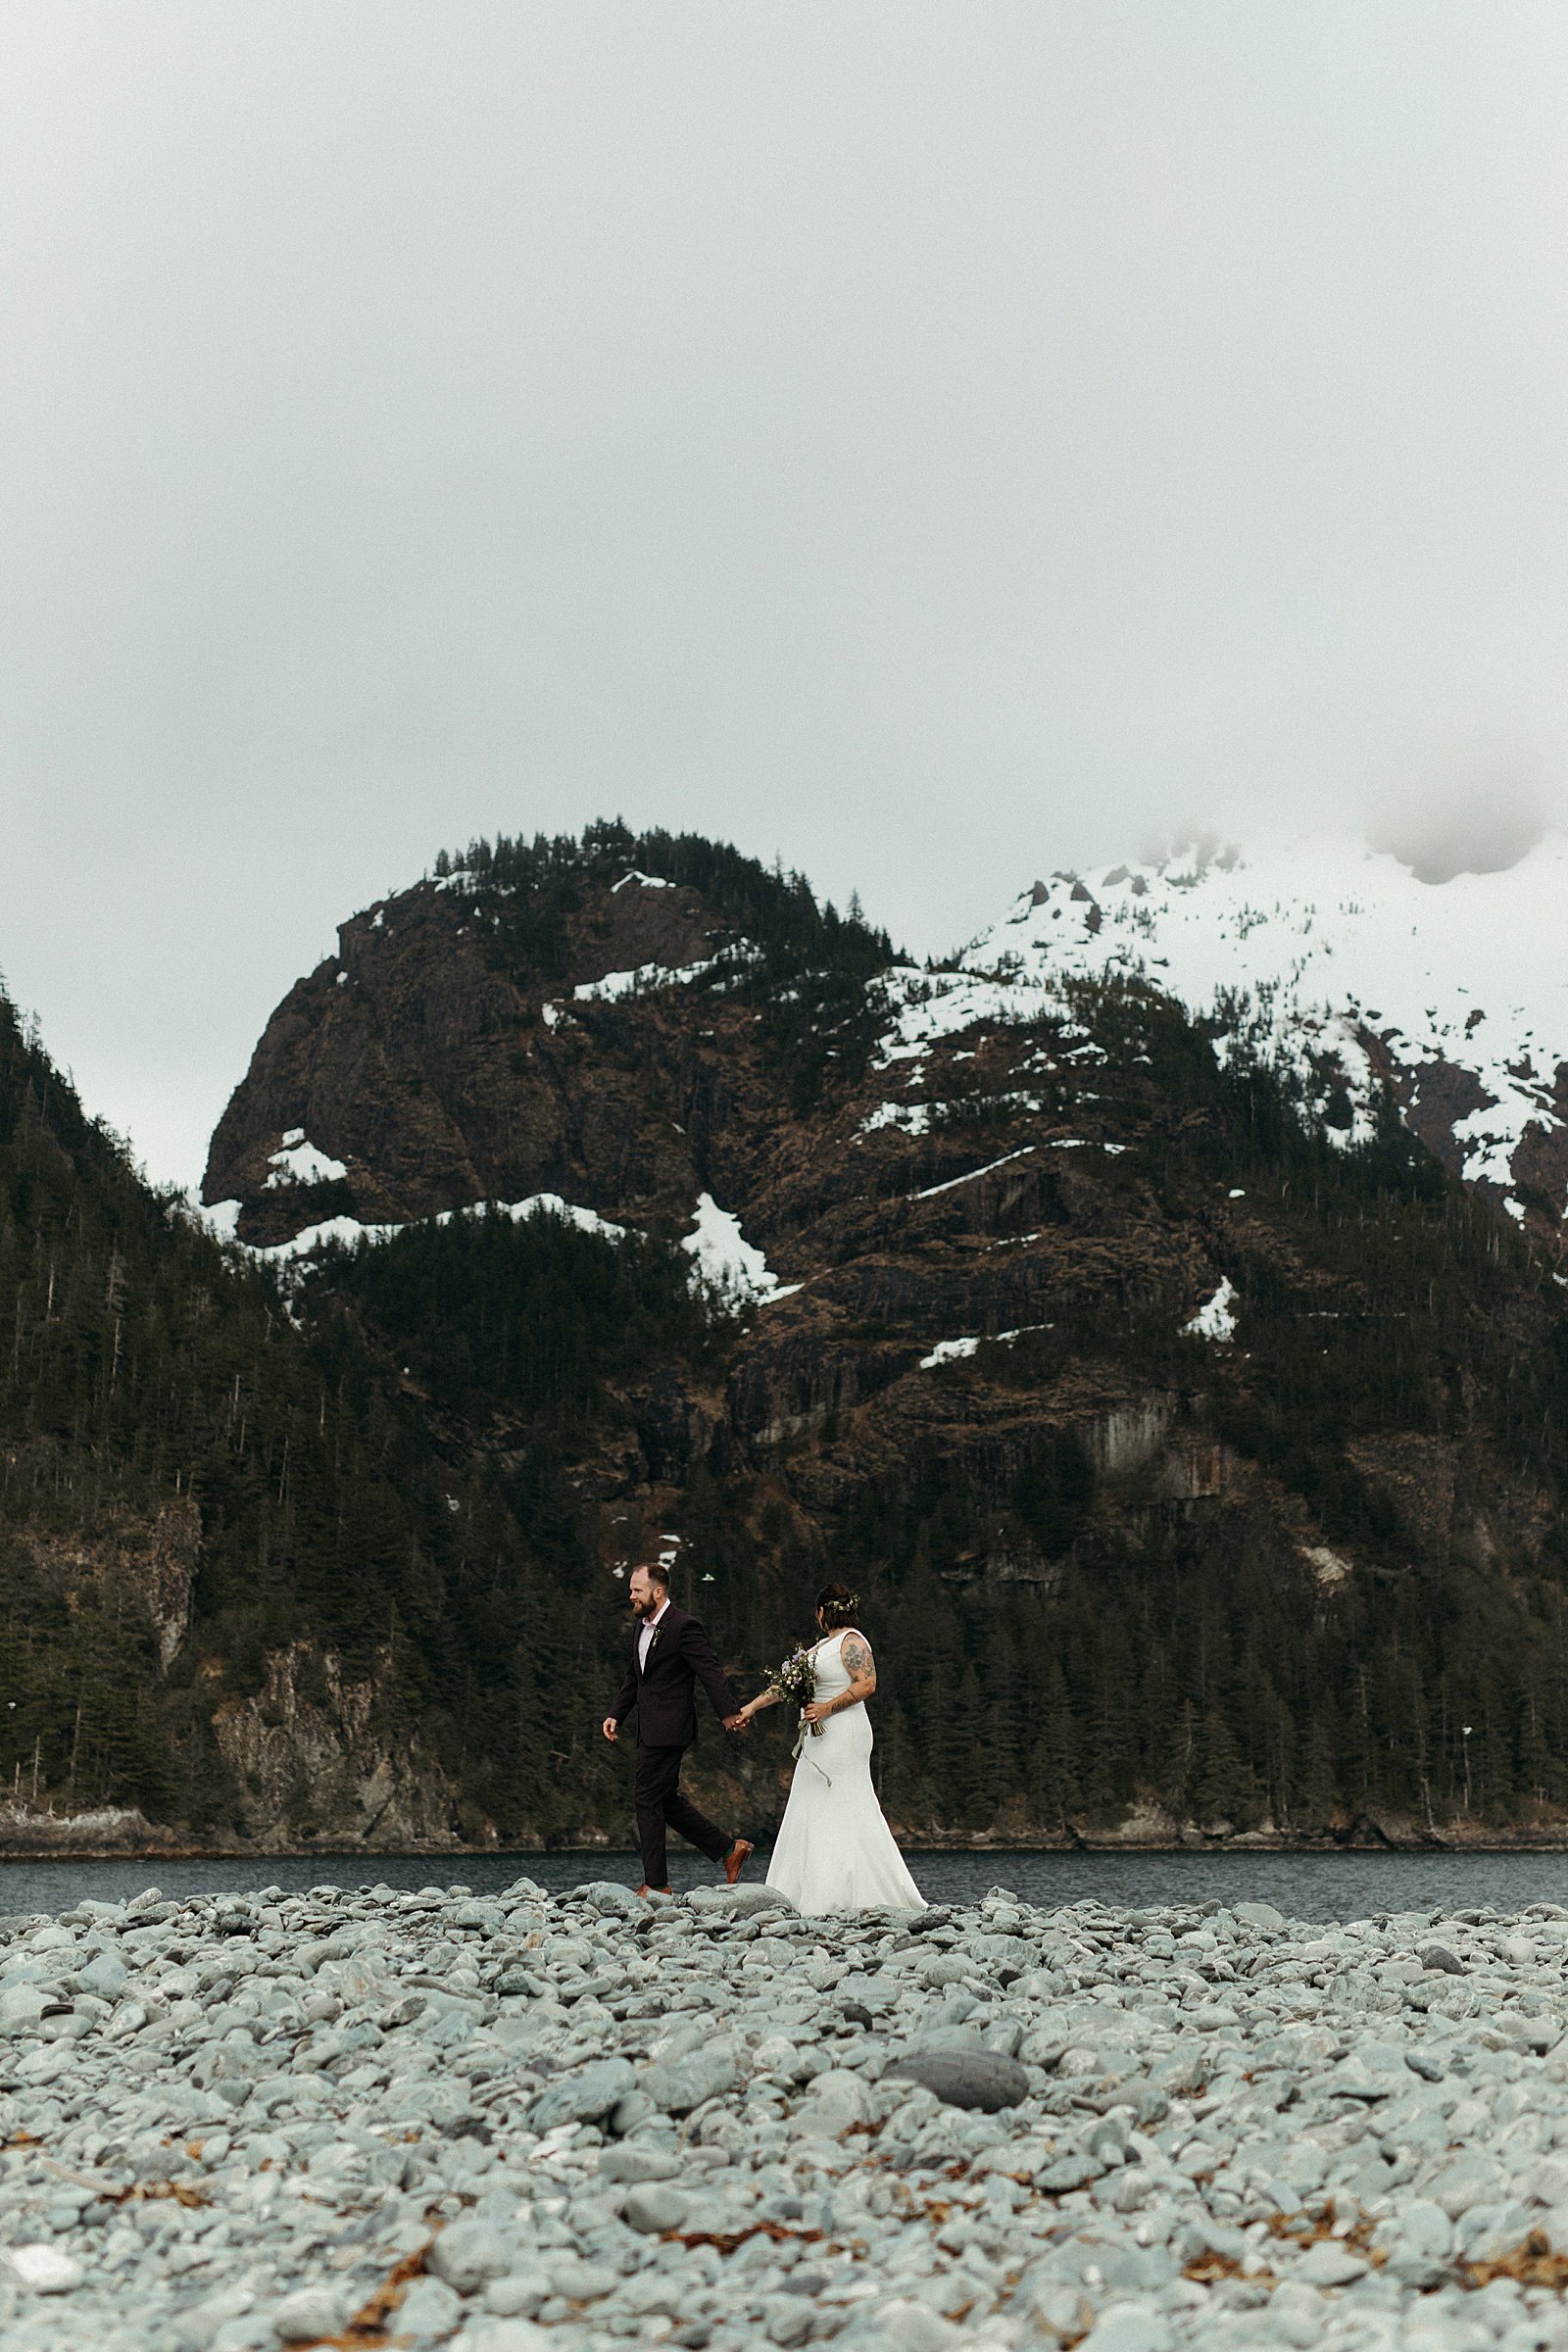  Newlyweds walking along a beach after their ceremony by an Alaska wedding photographer 